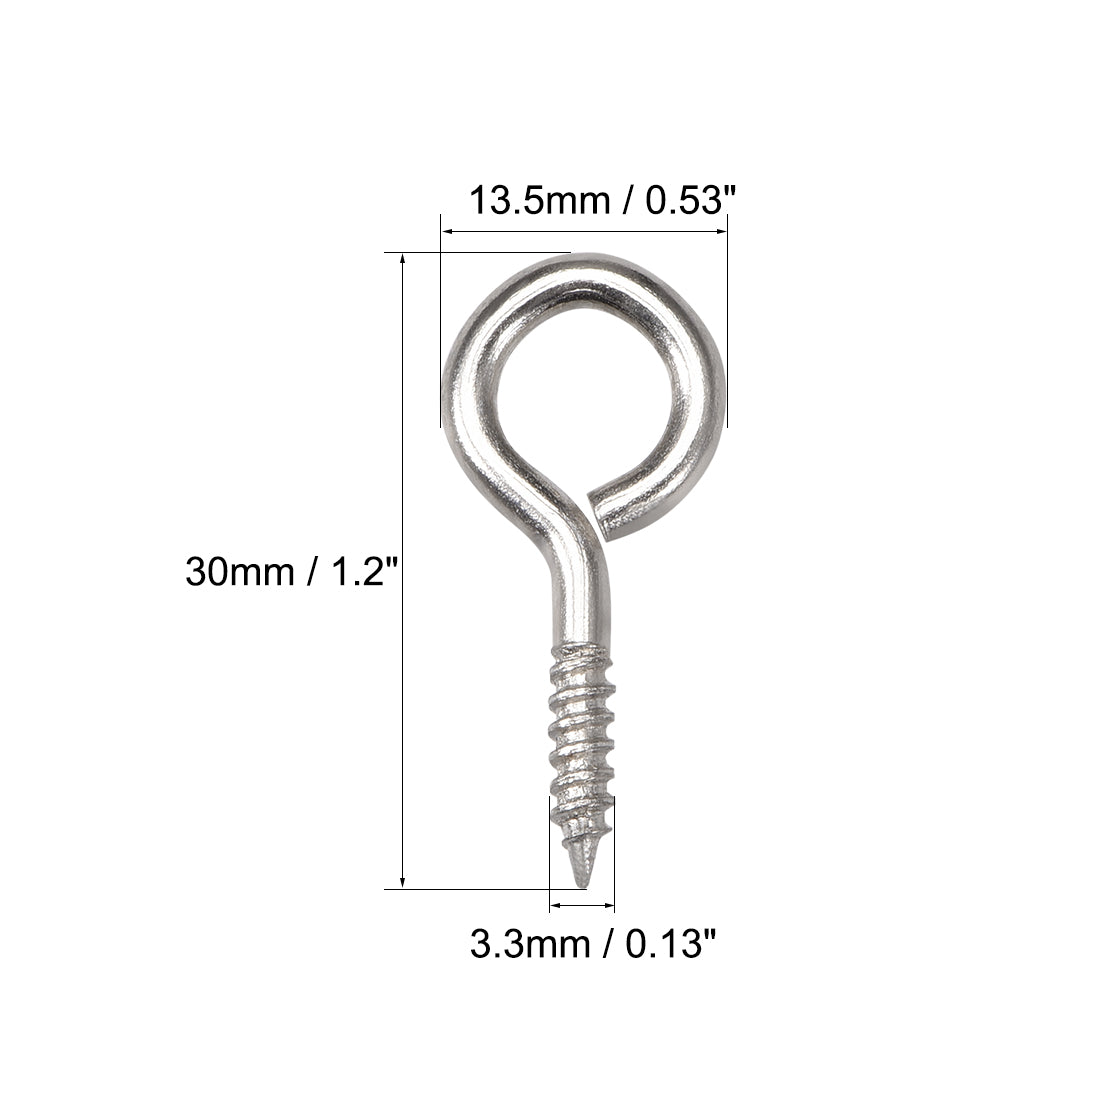 uxcell Uxcell 1.2" Small Screw Eye Hooks Self Tapping Screws Carbon Steel Screw-in Hanger Eye-Shape Ring Hooks Silver 50pcs